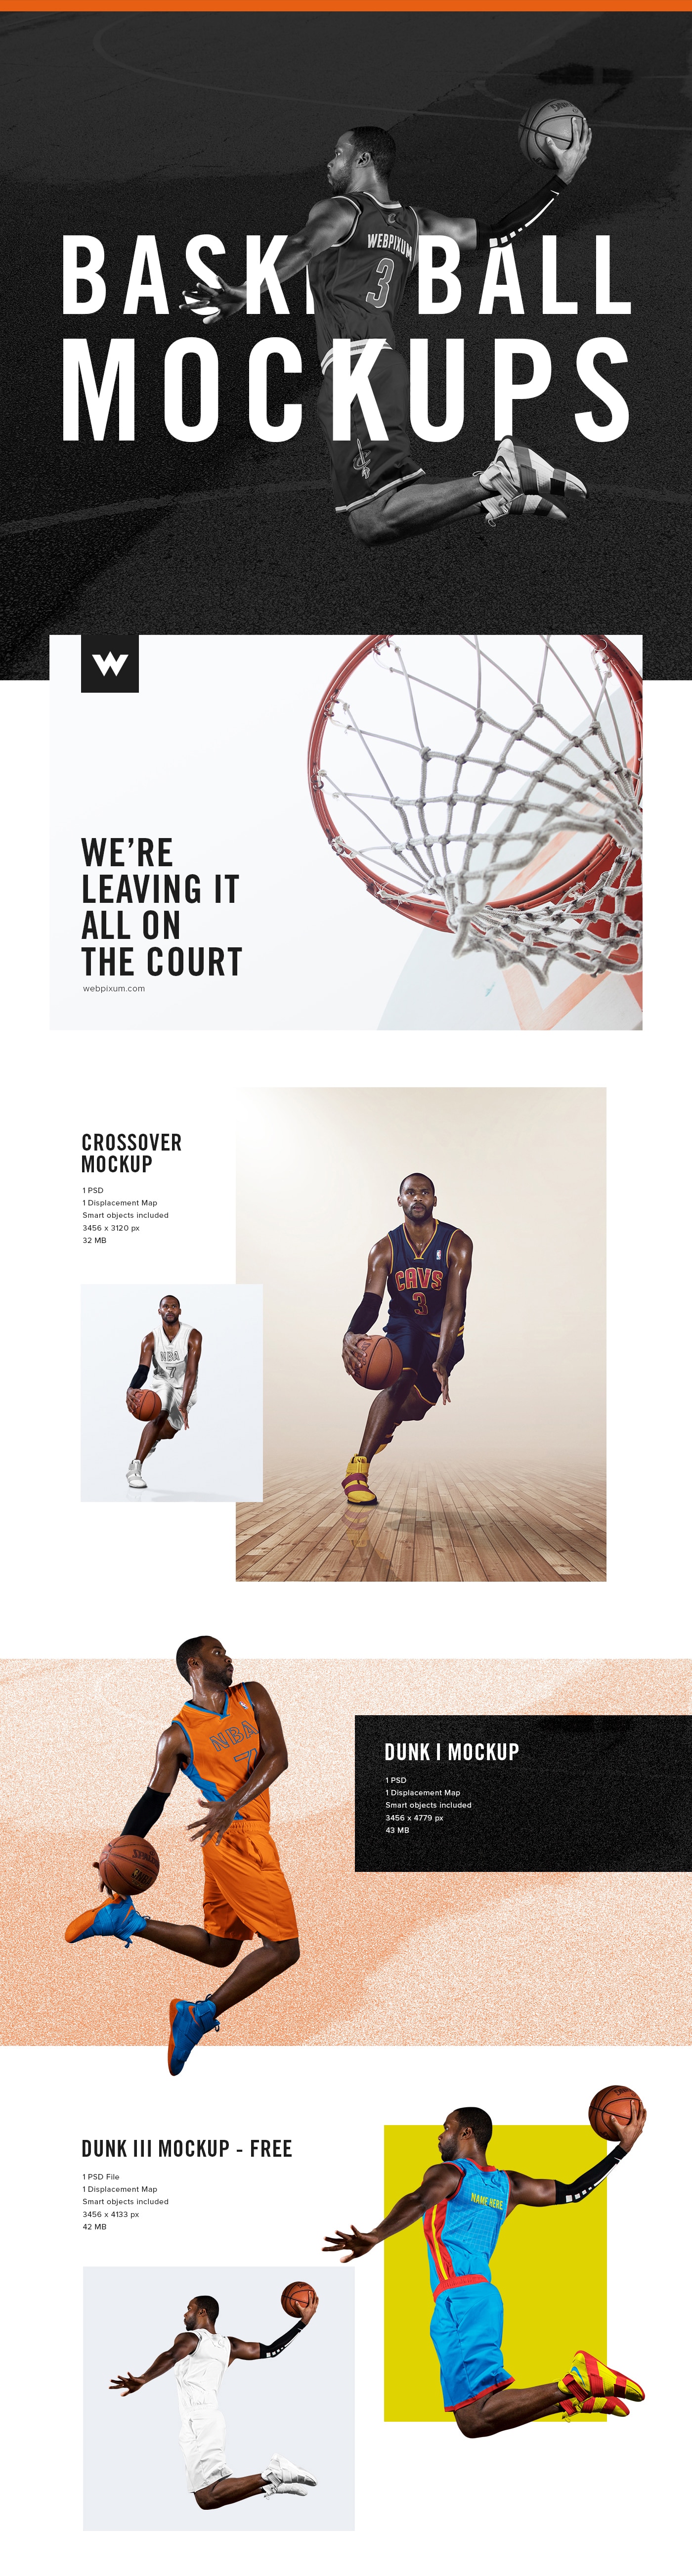 NBA Basketball Dunk